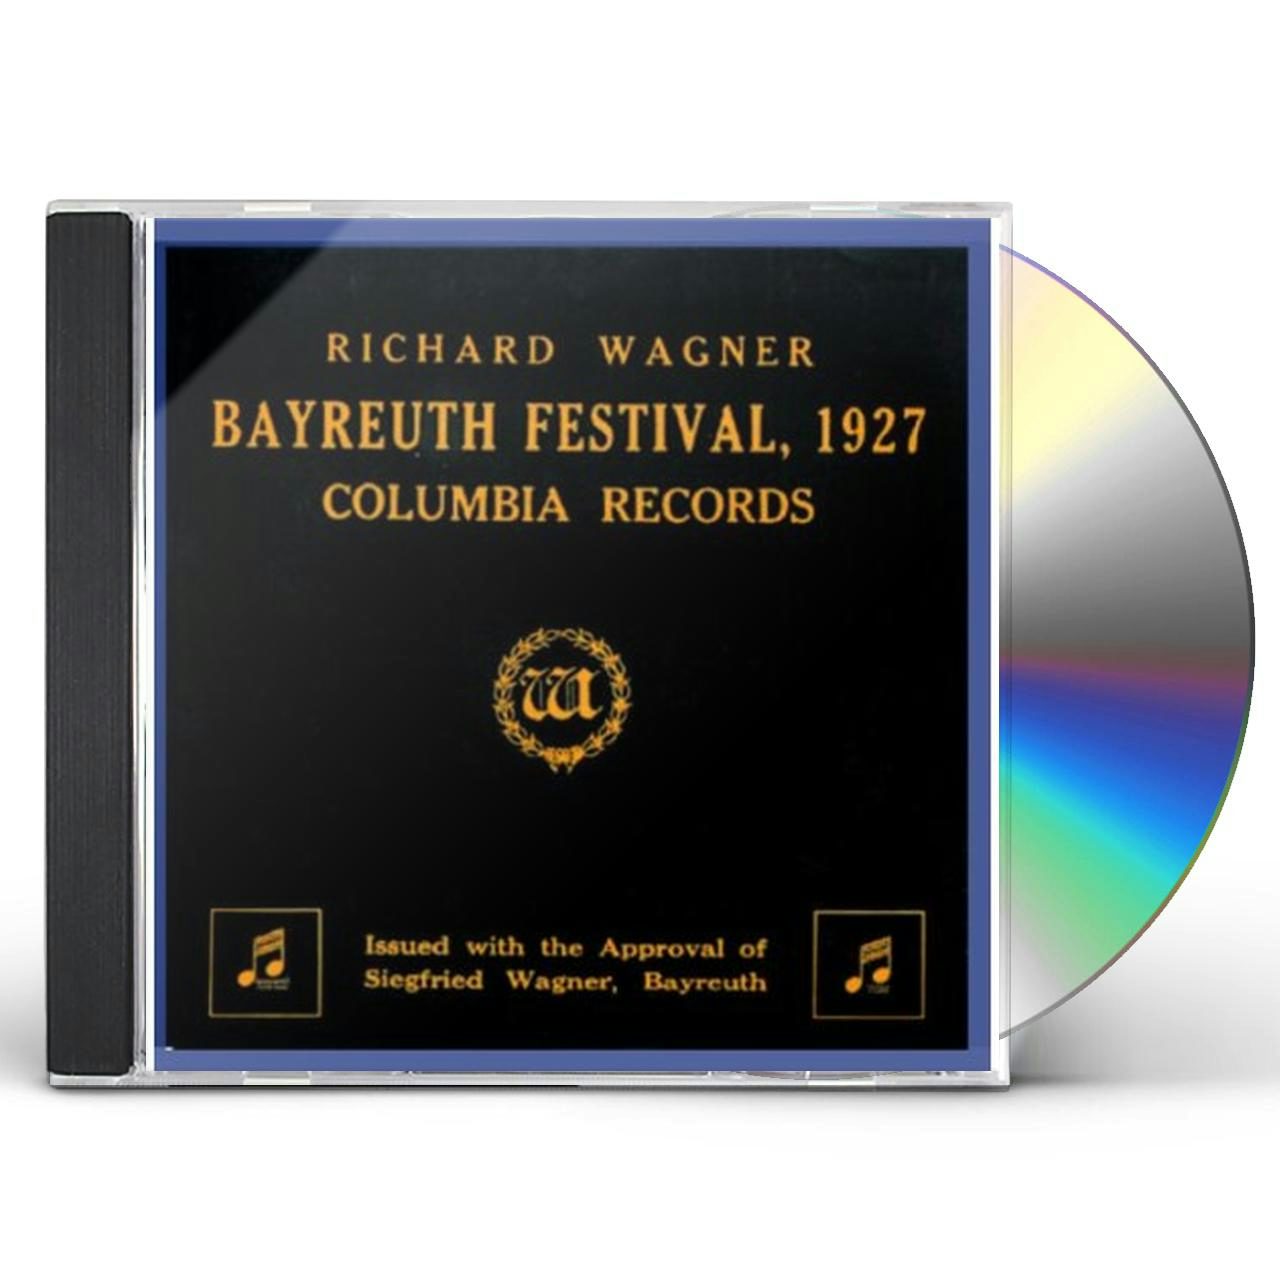 Richard Wagner BAYREUTH FESTIVAL 1927 CD